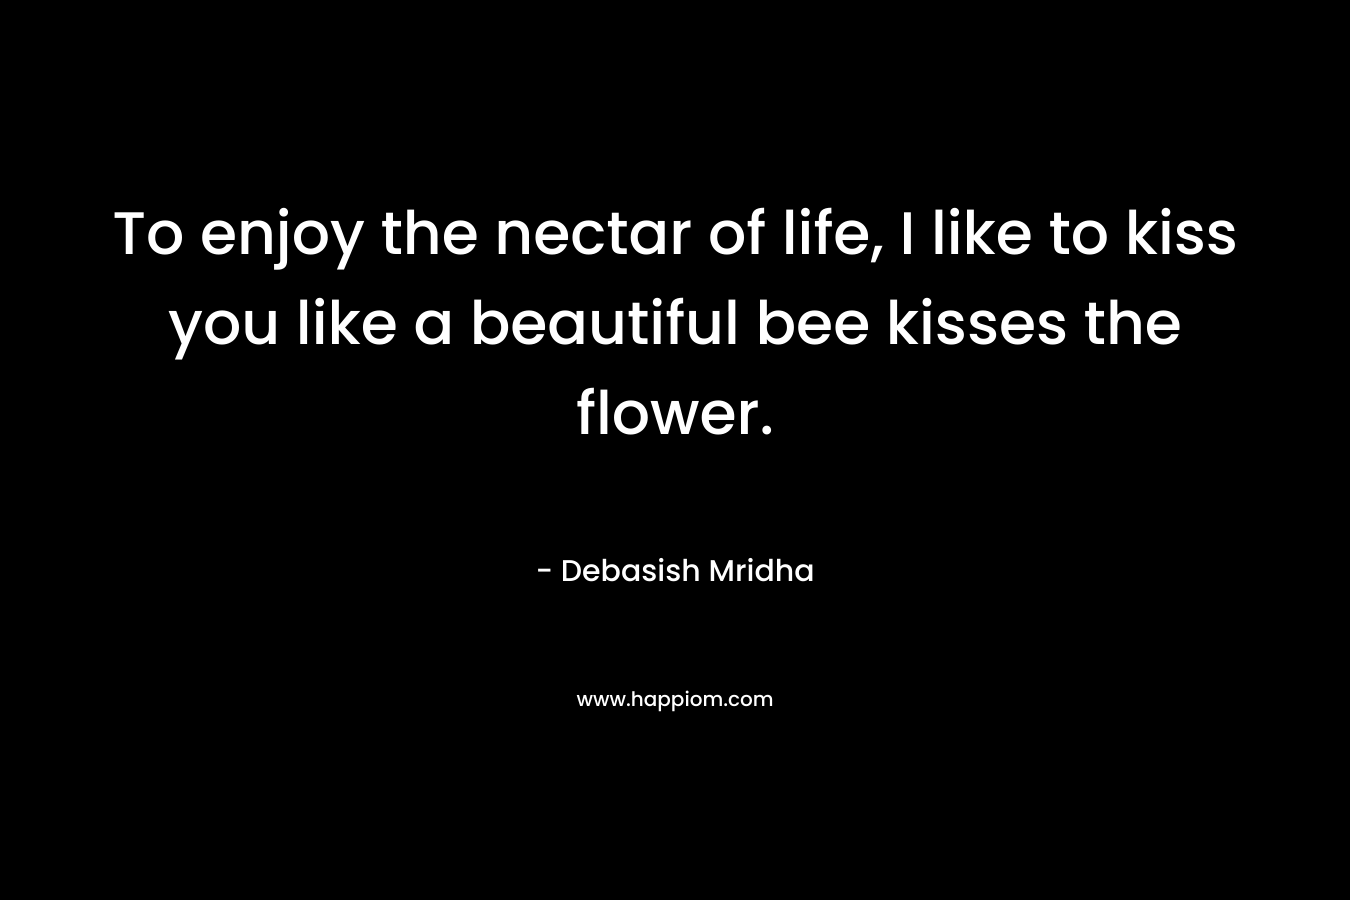 To enjoy the nectar of life, I like to kiss you like a beautiful bee kisses the flower. – Debasish Mridha